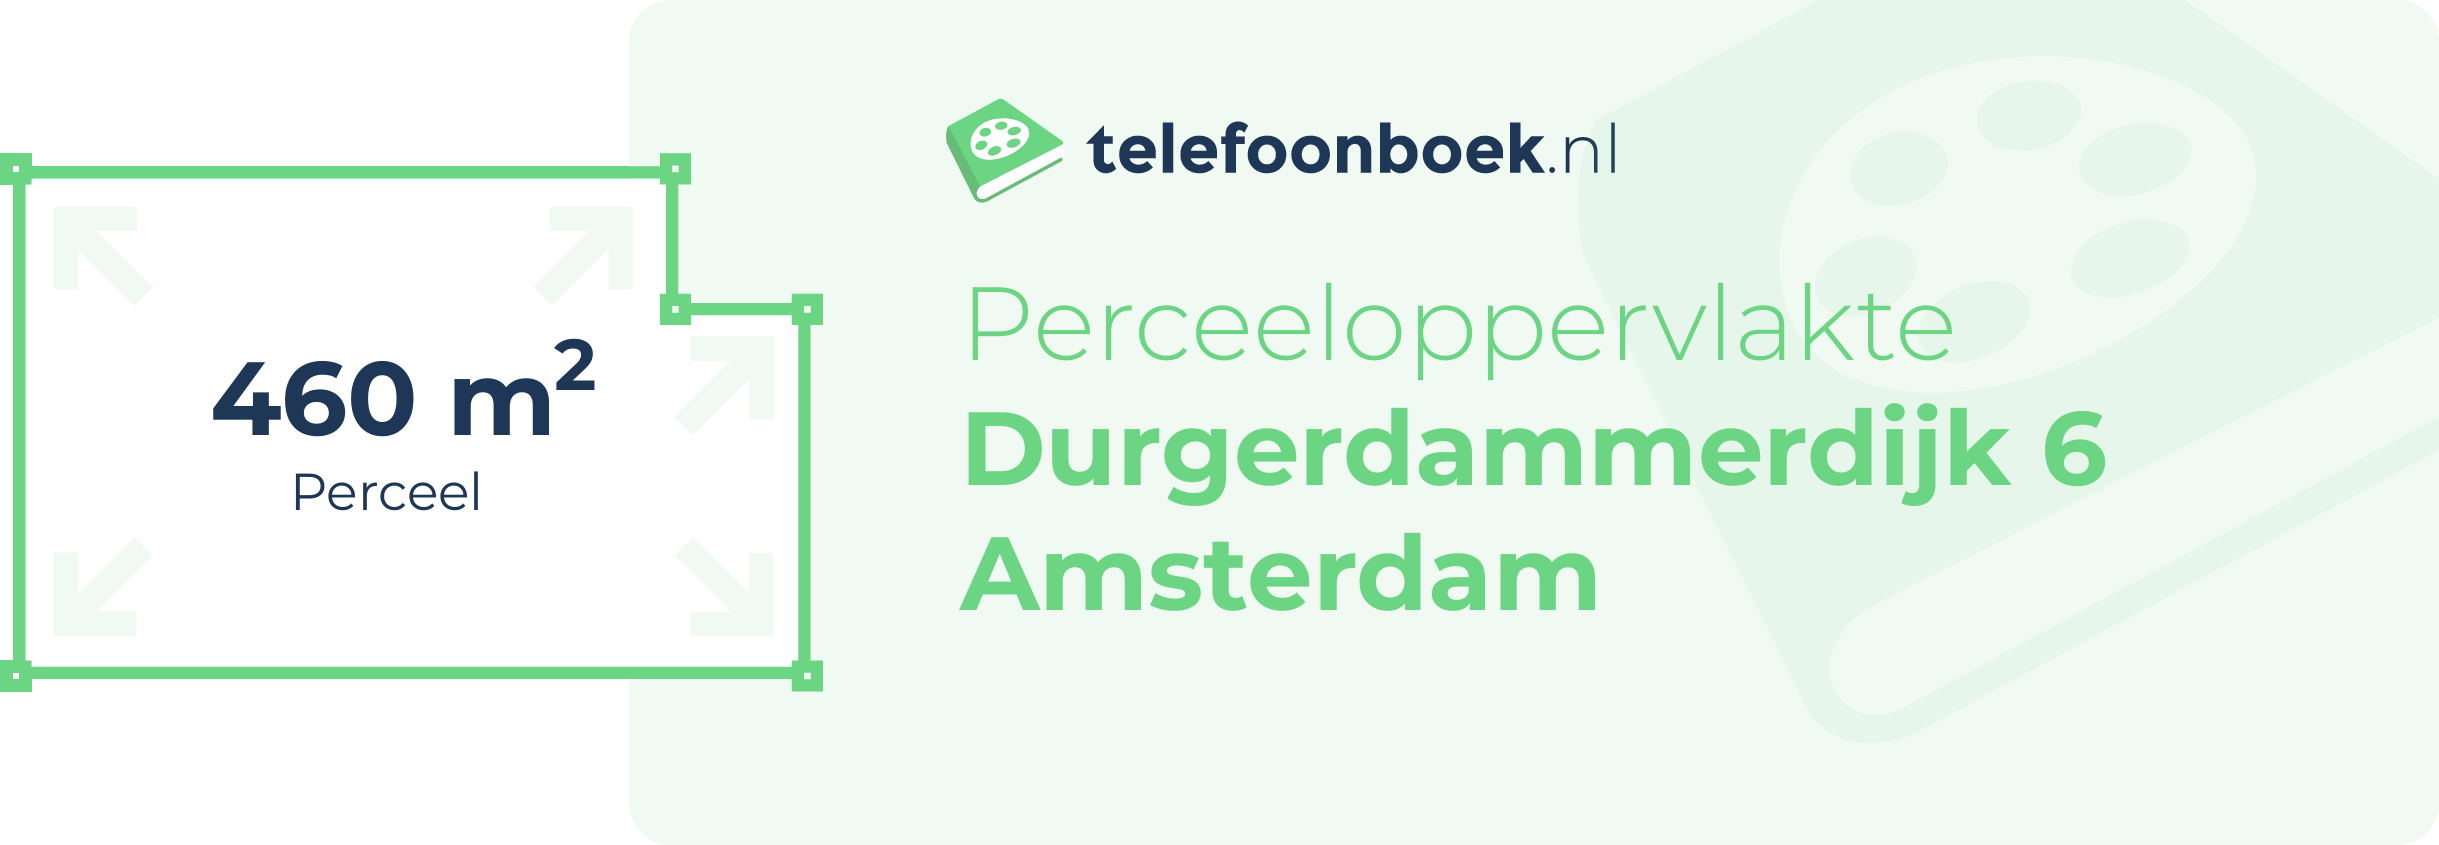 Perceeloppervlakte Durgerdammerdijk 6 Amsterdam